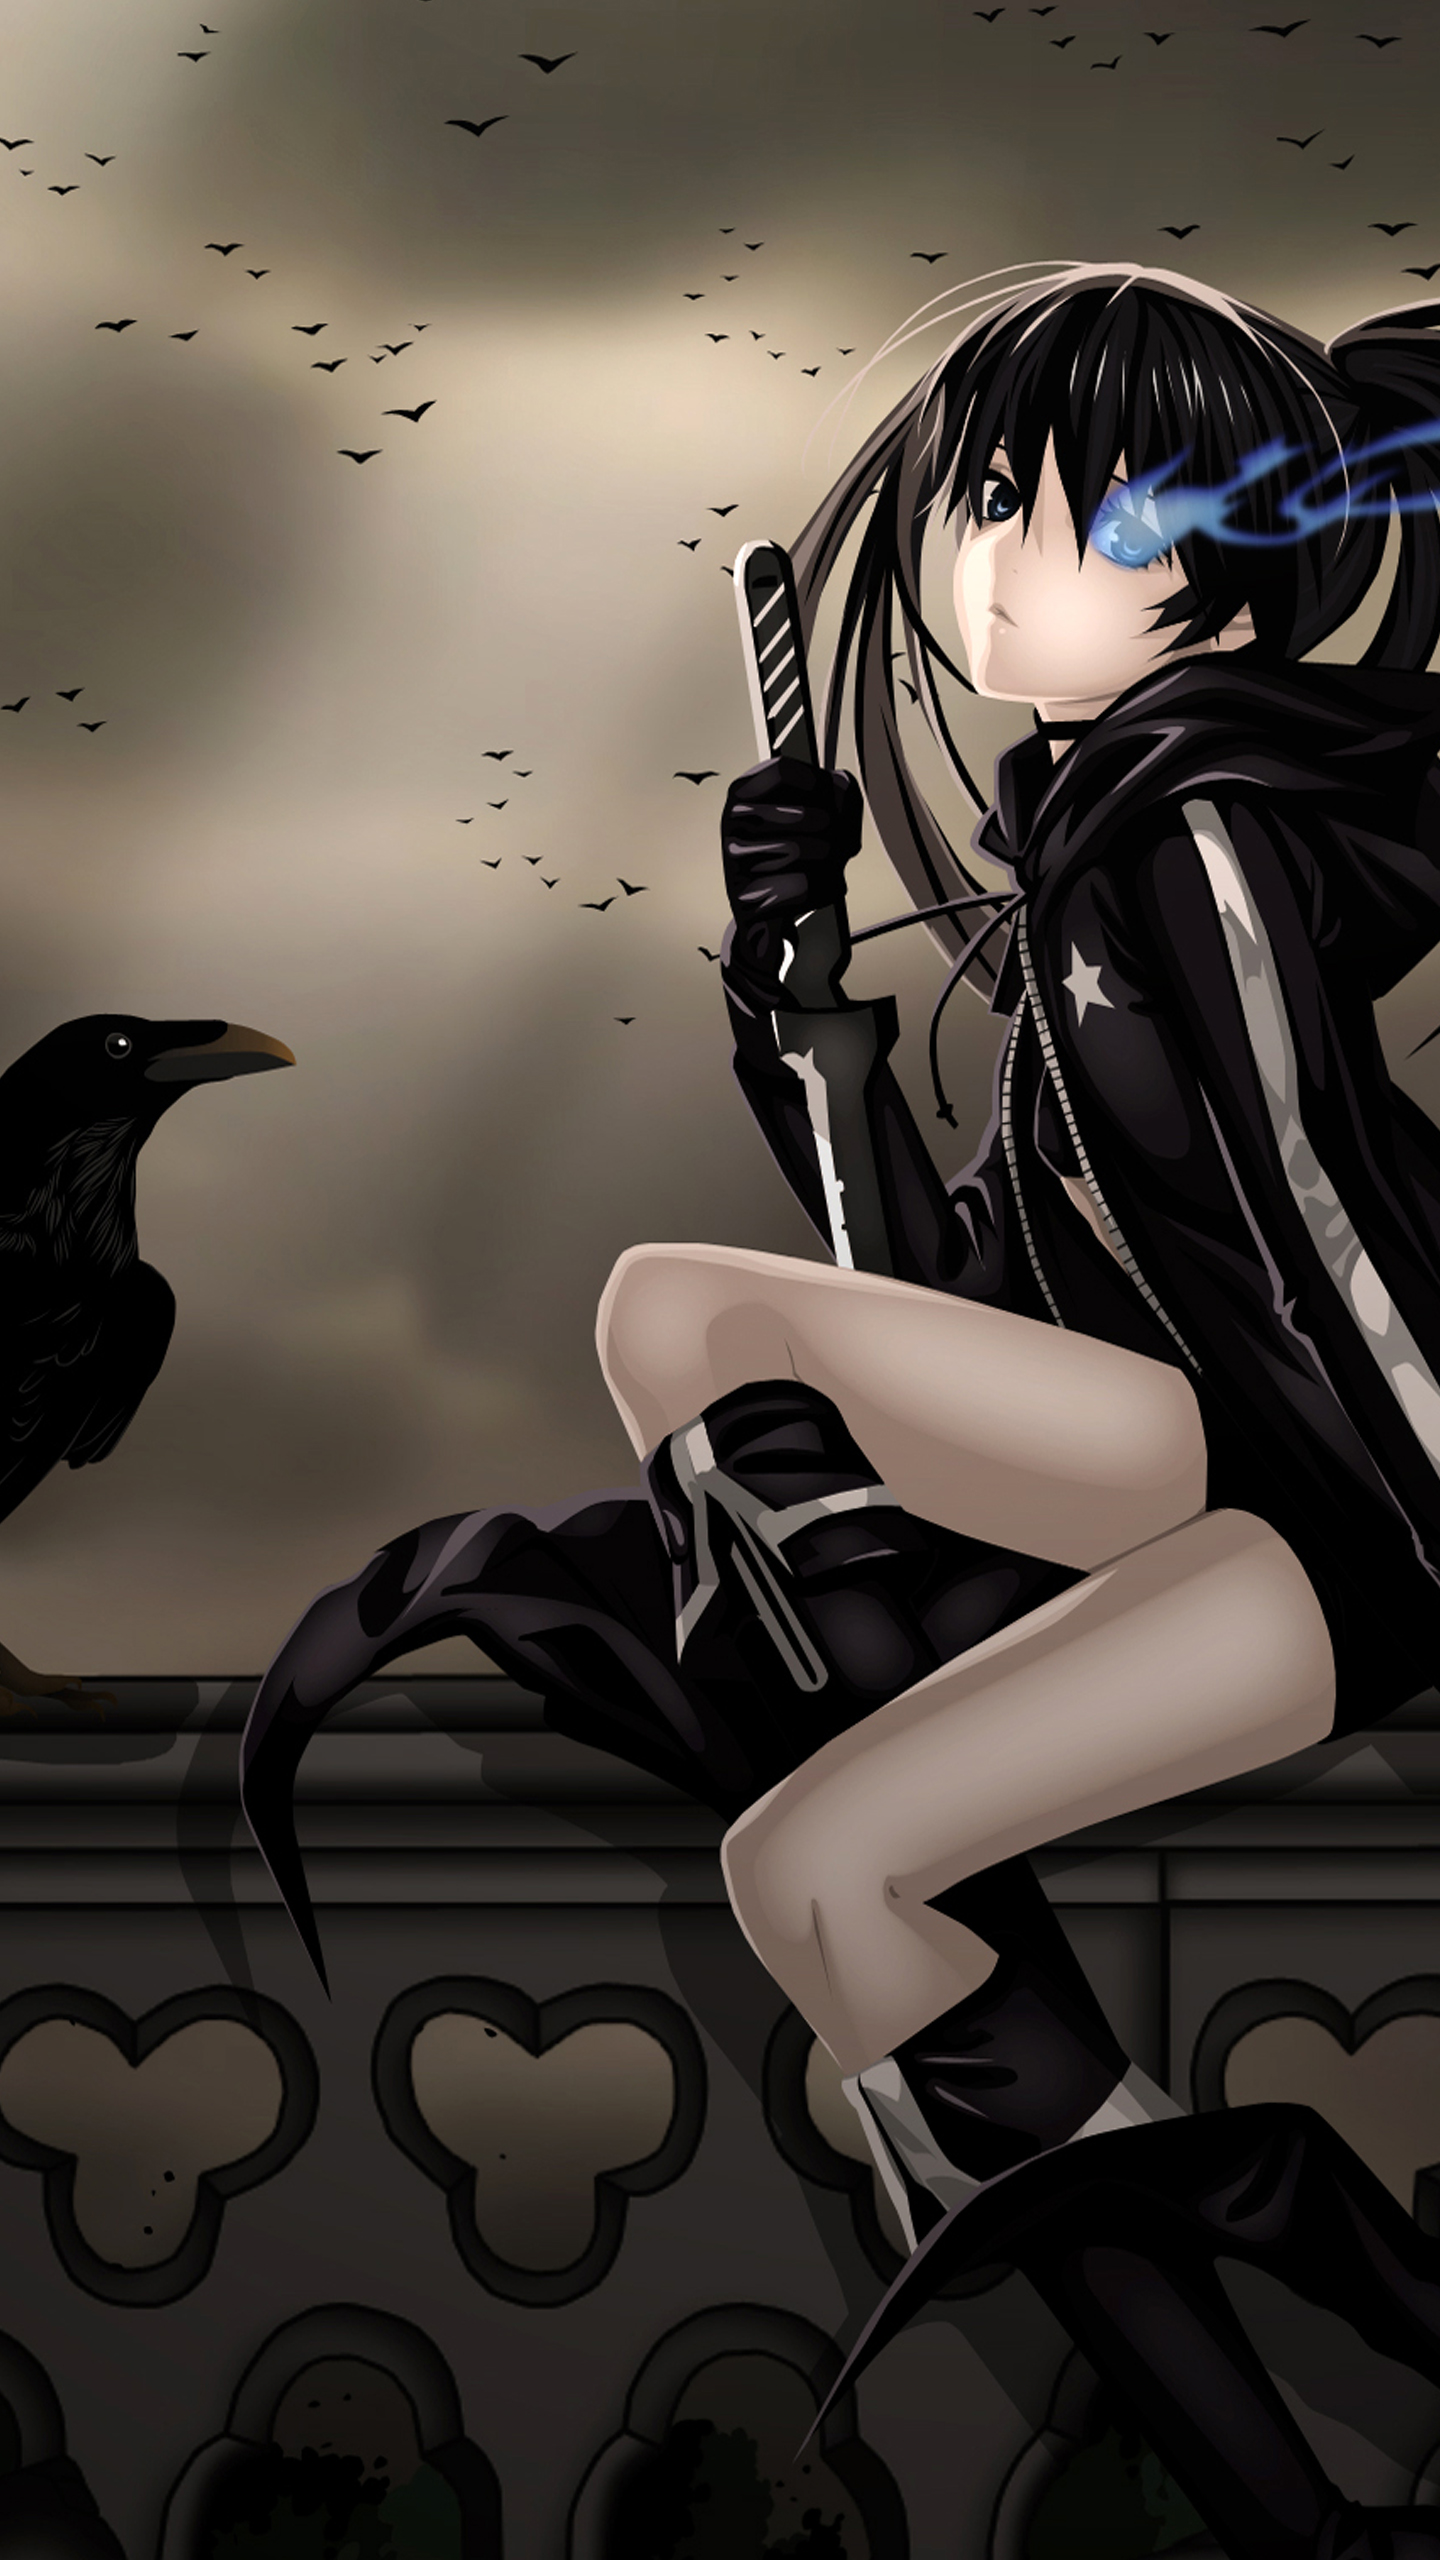 Free download Resolution 1440x2560 Wallpaper Raven girl